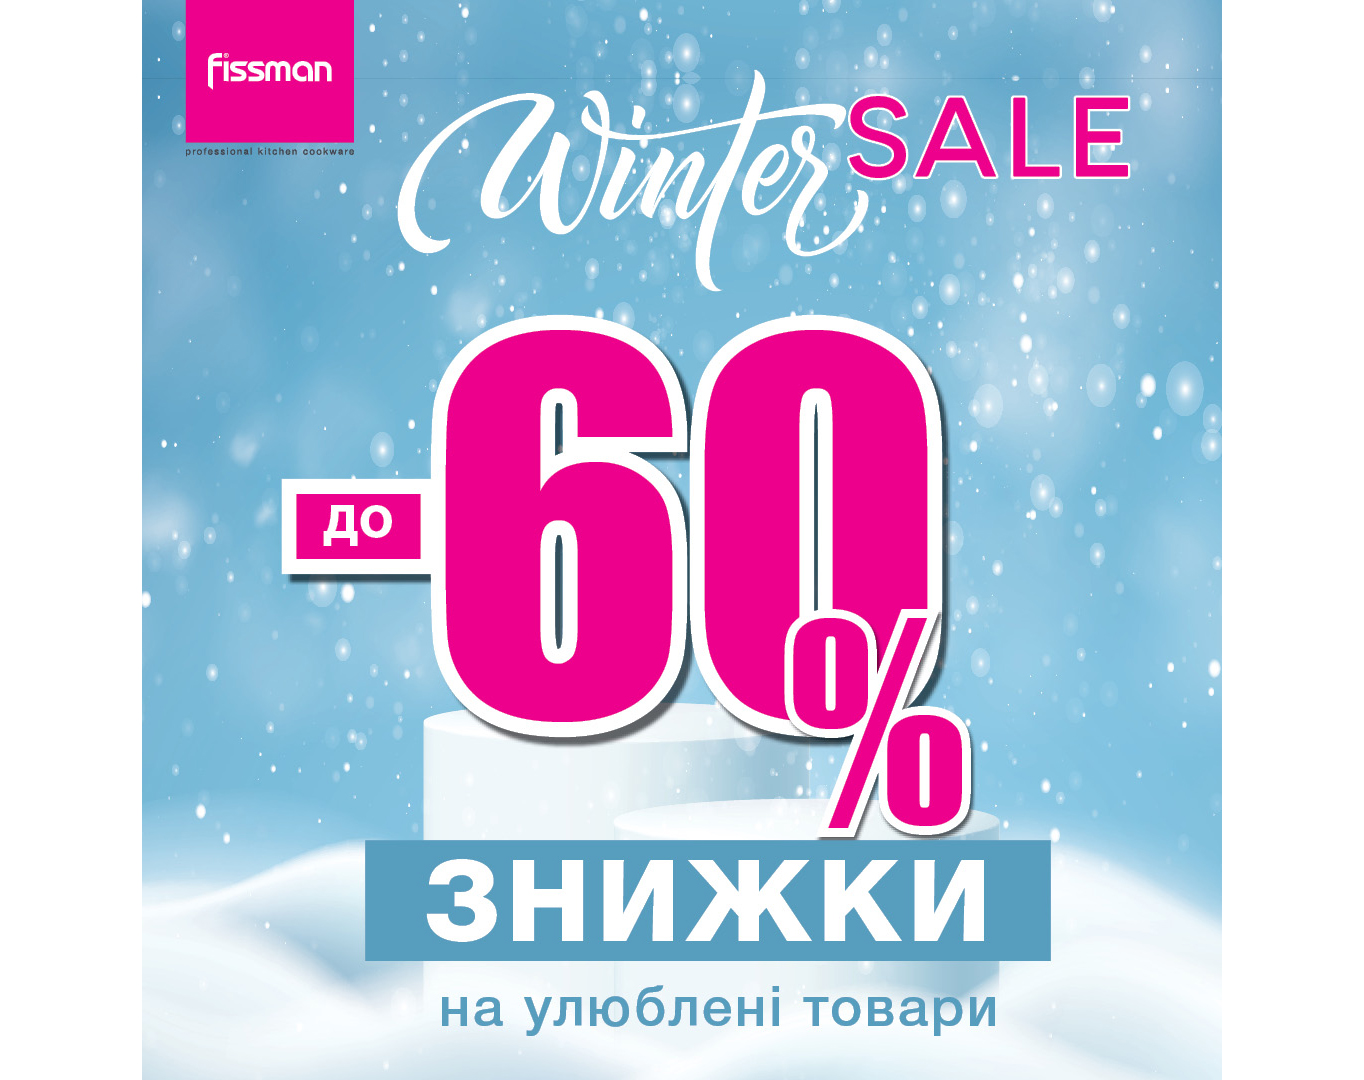 Winter Sale на fissman.ua согревает